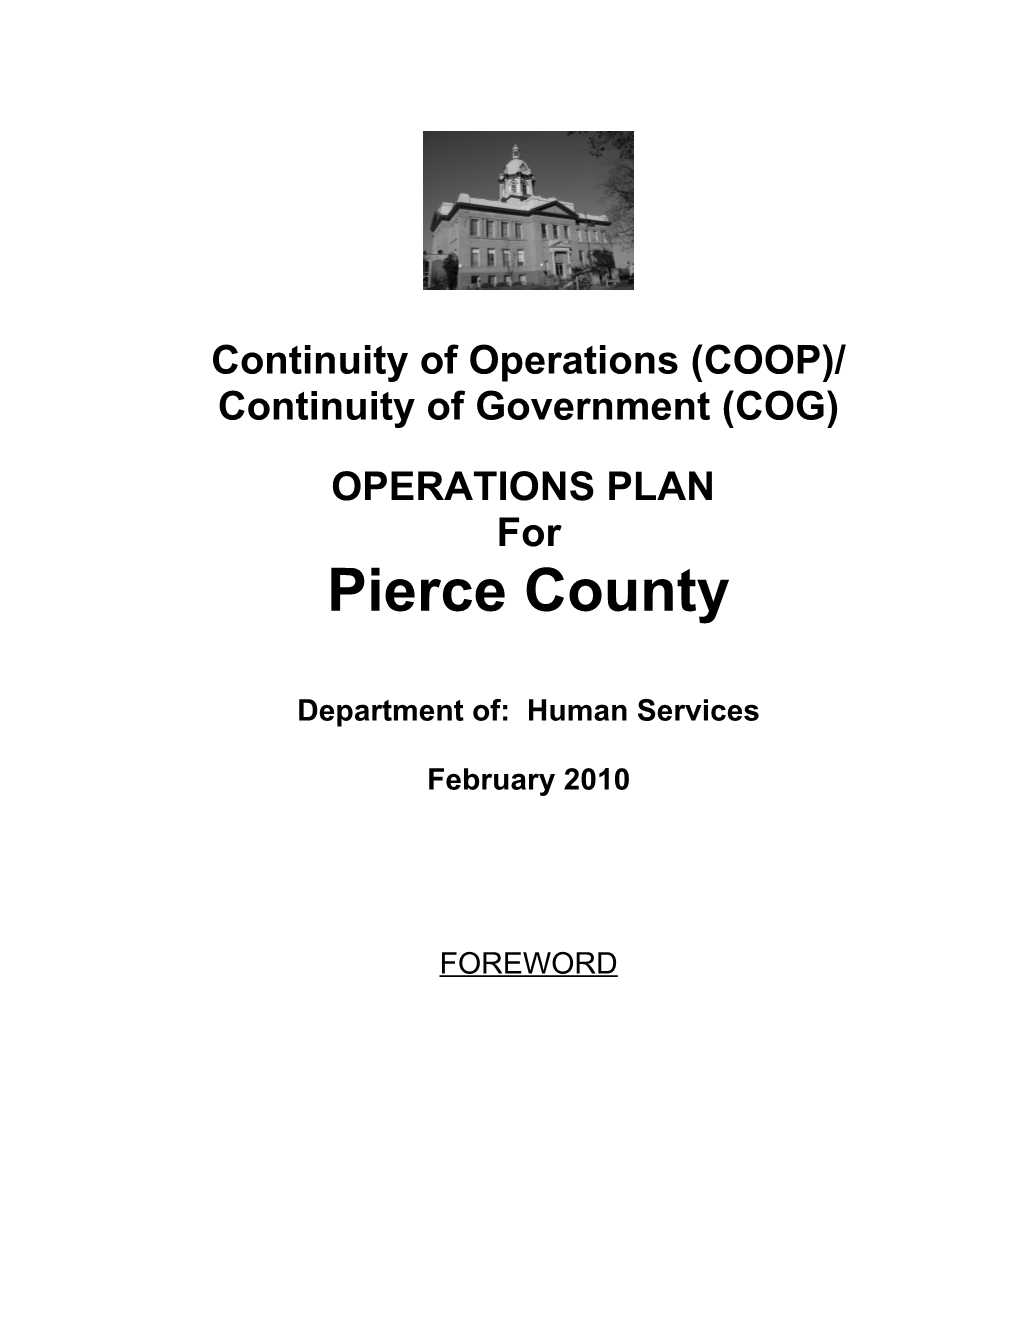 Operations Plan Template (COOP / COG)